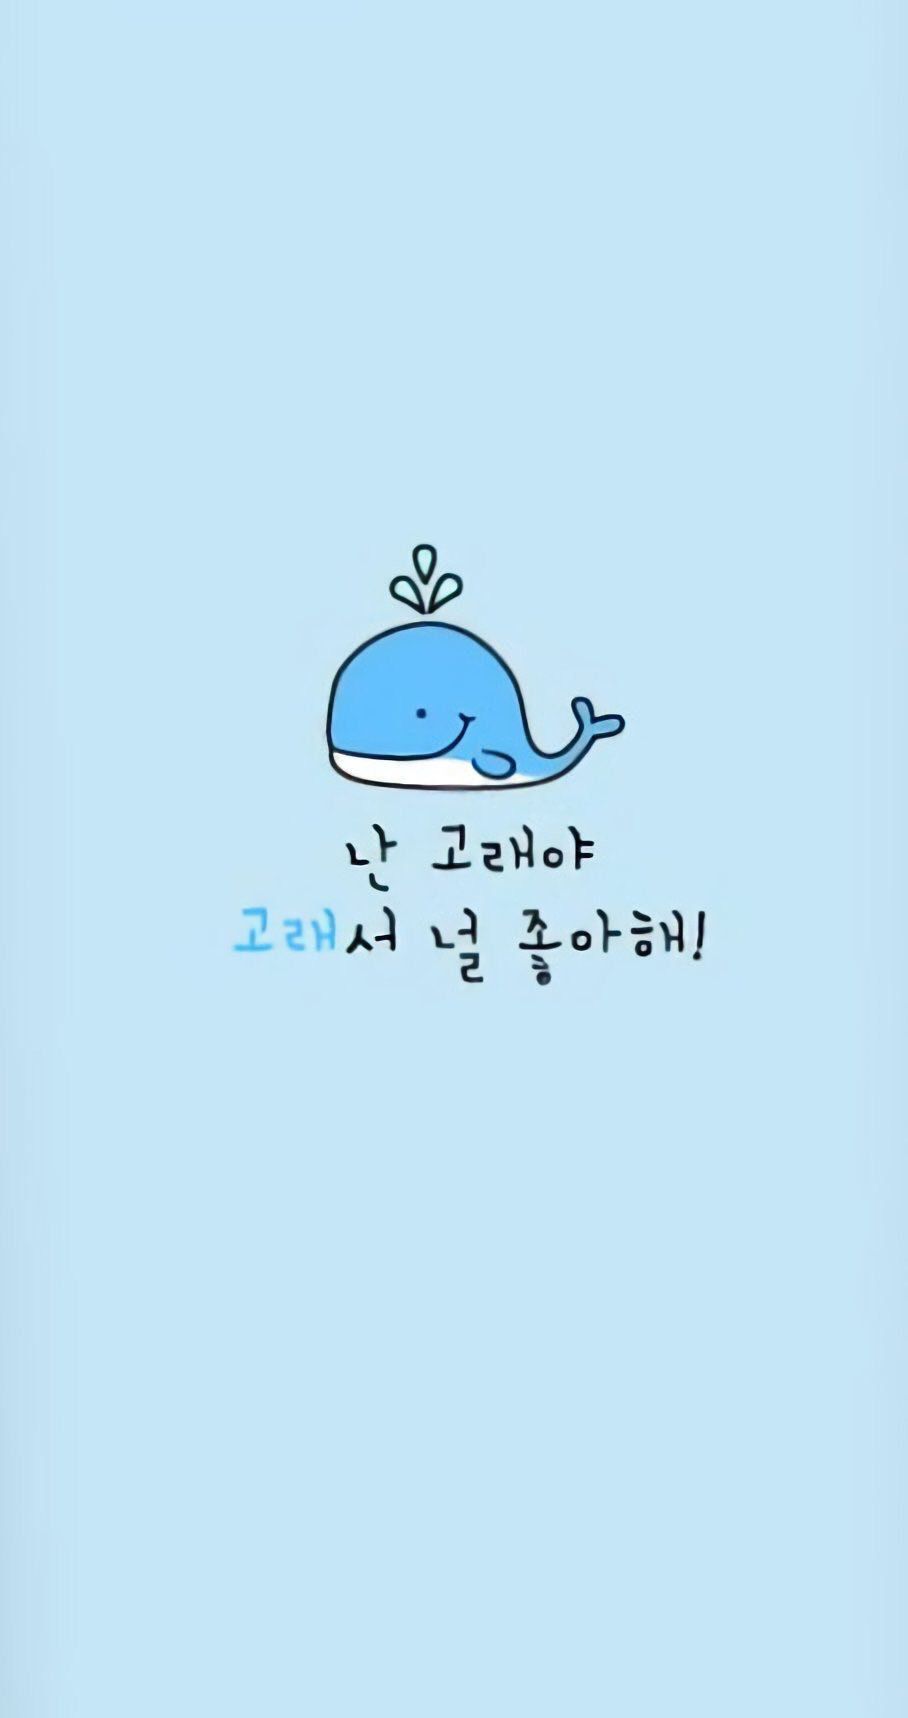 Seungmin phonecase. iPhone wallpaper korean, Korea wallpaper, Cute cartoon wallpaper